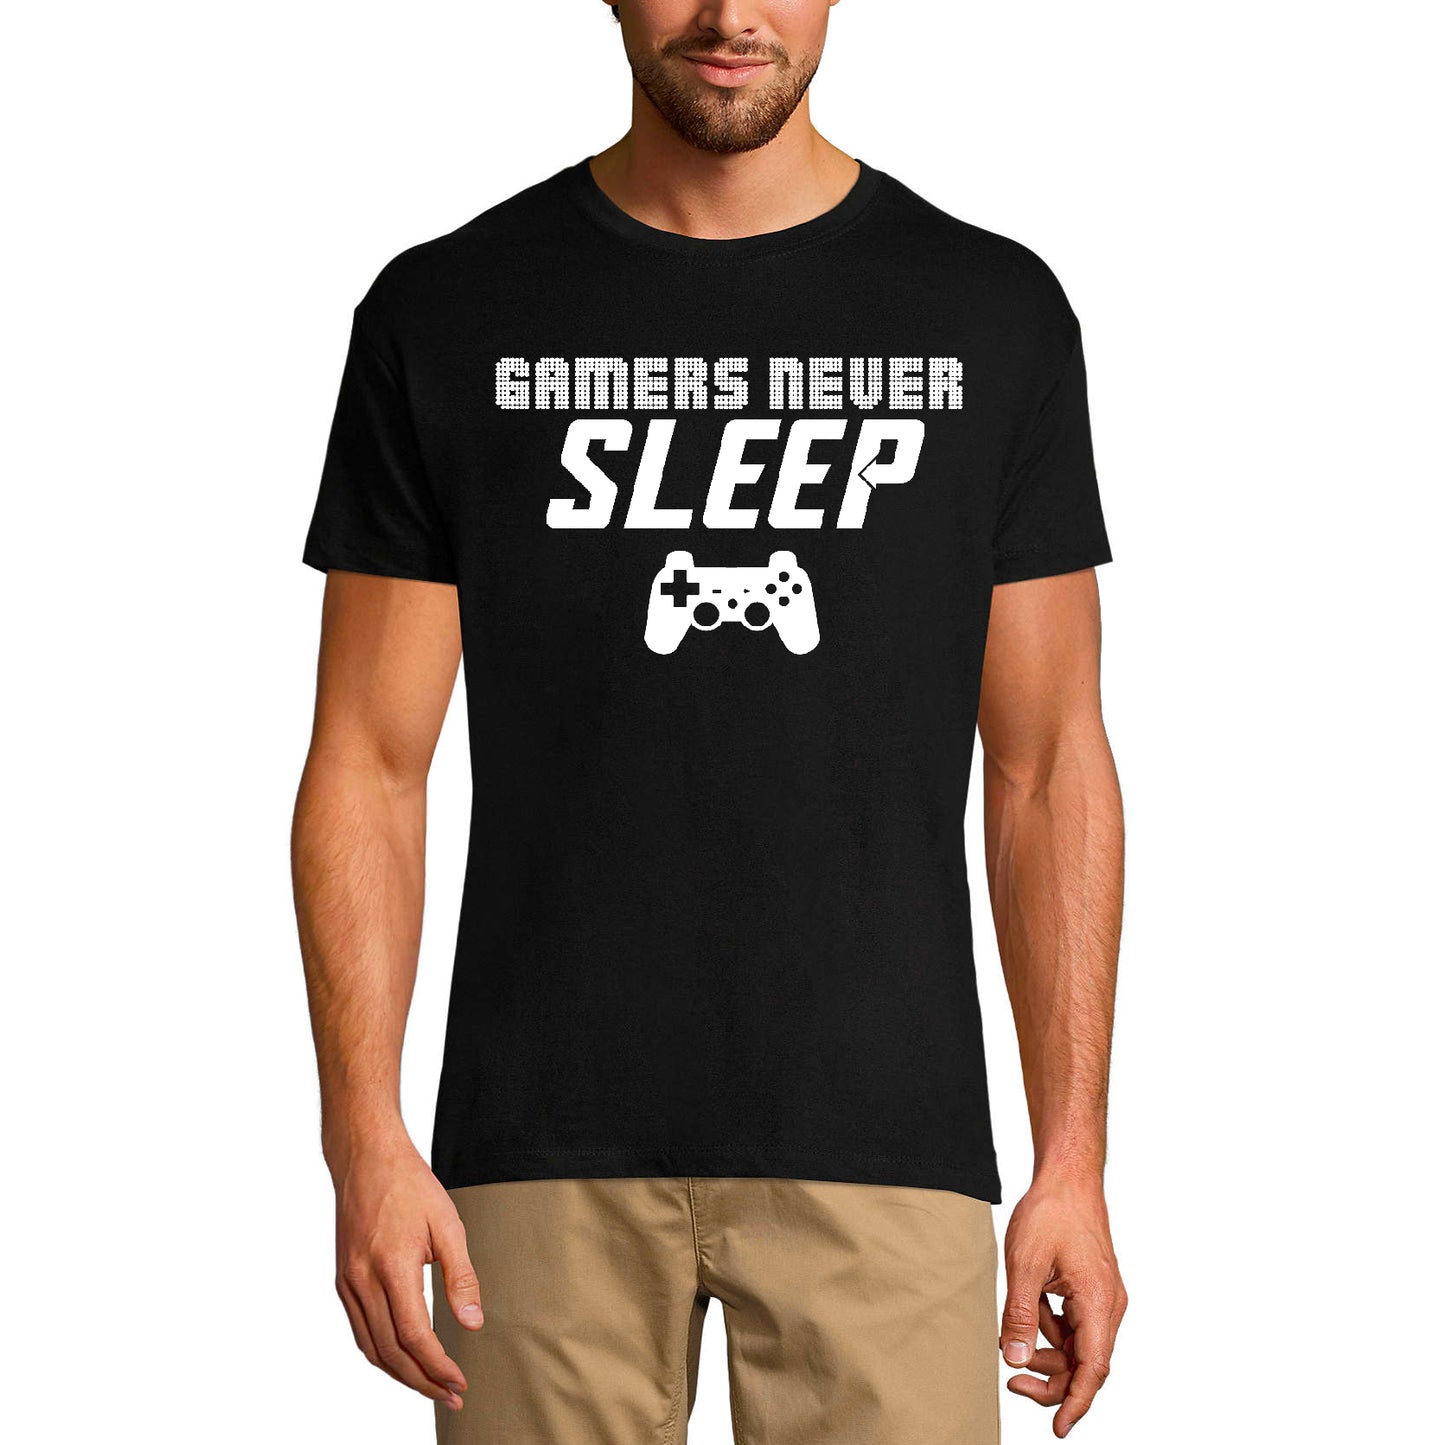 ULTRABASIC Herren-Gaming-T-Shirt – Gamers Never Sleep – Lustiges Spruch-Witz-Shirt